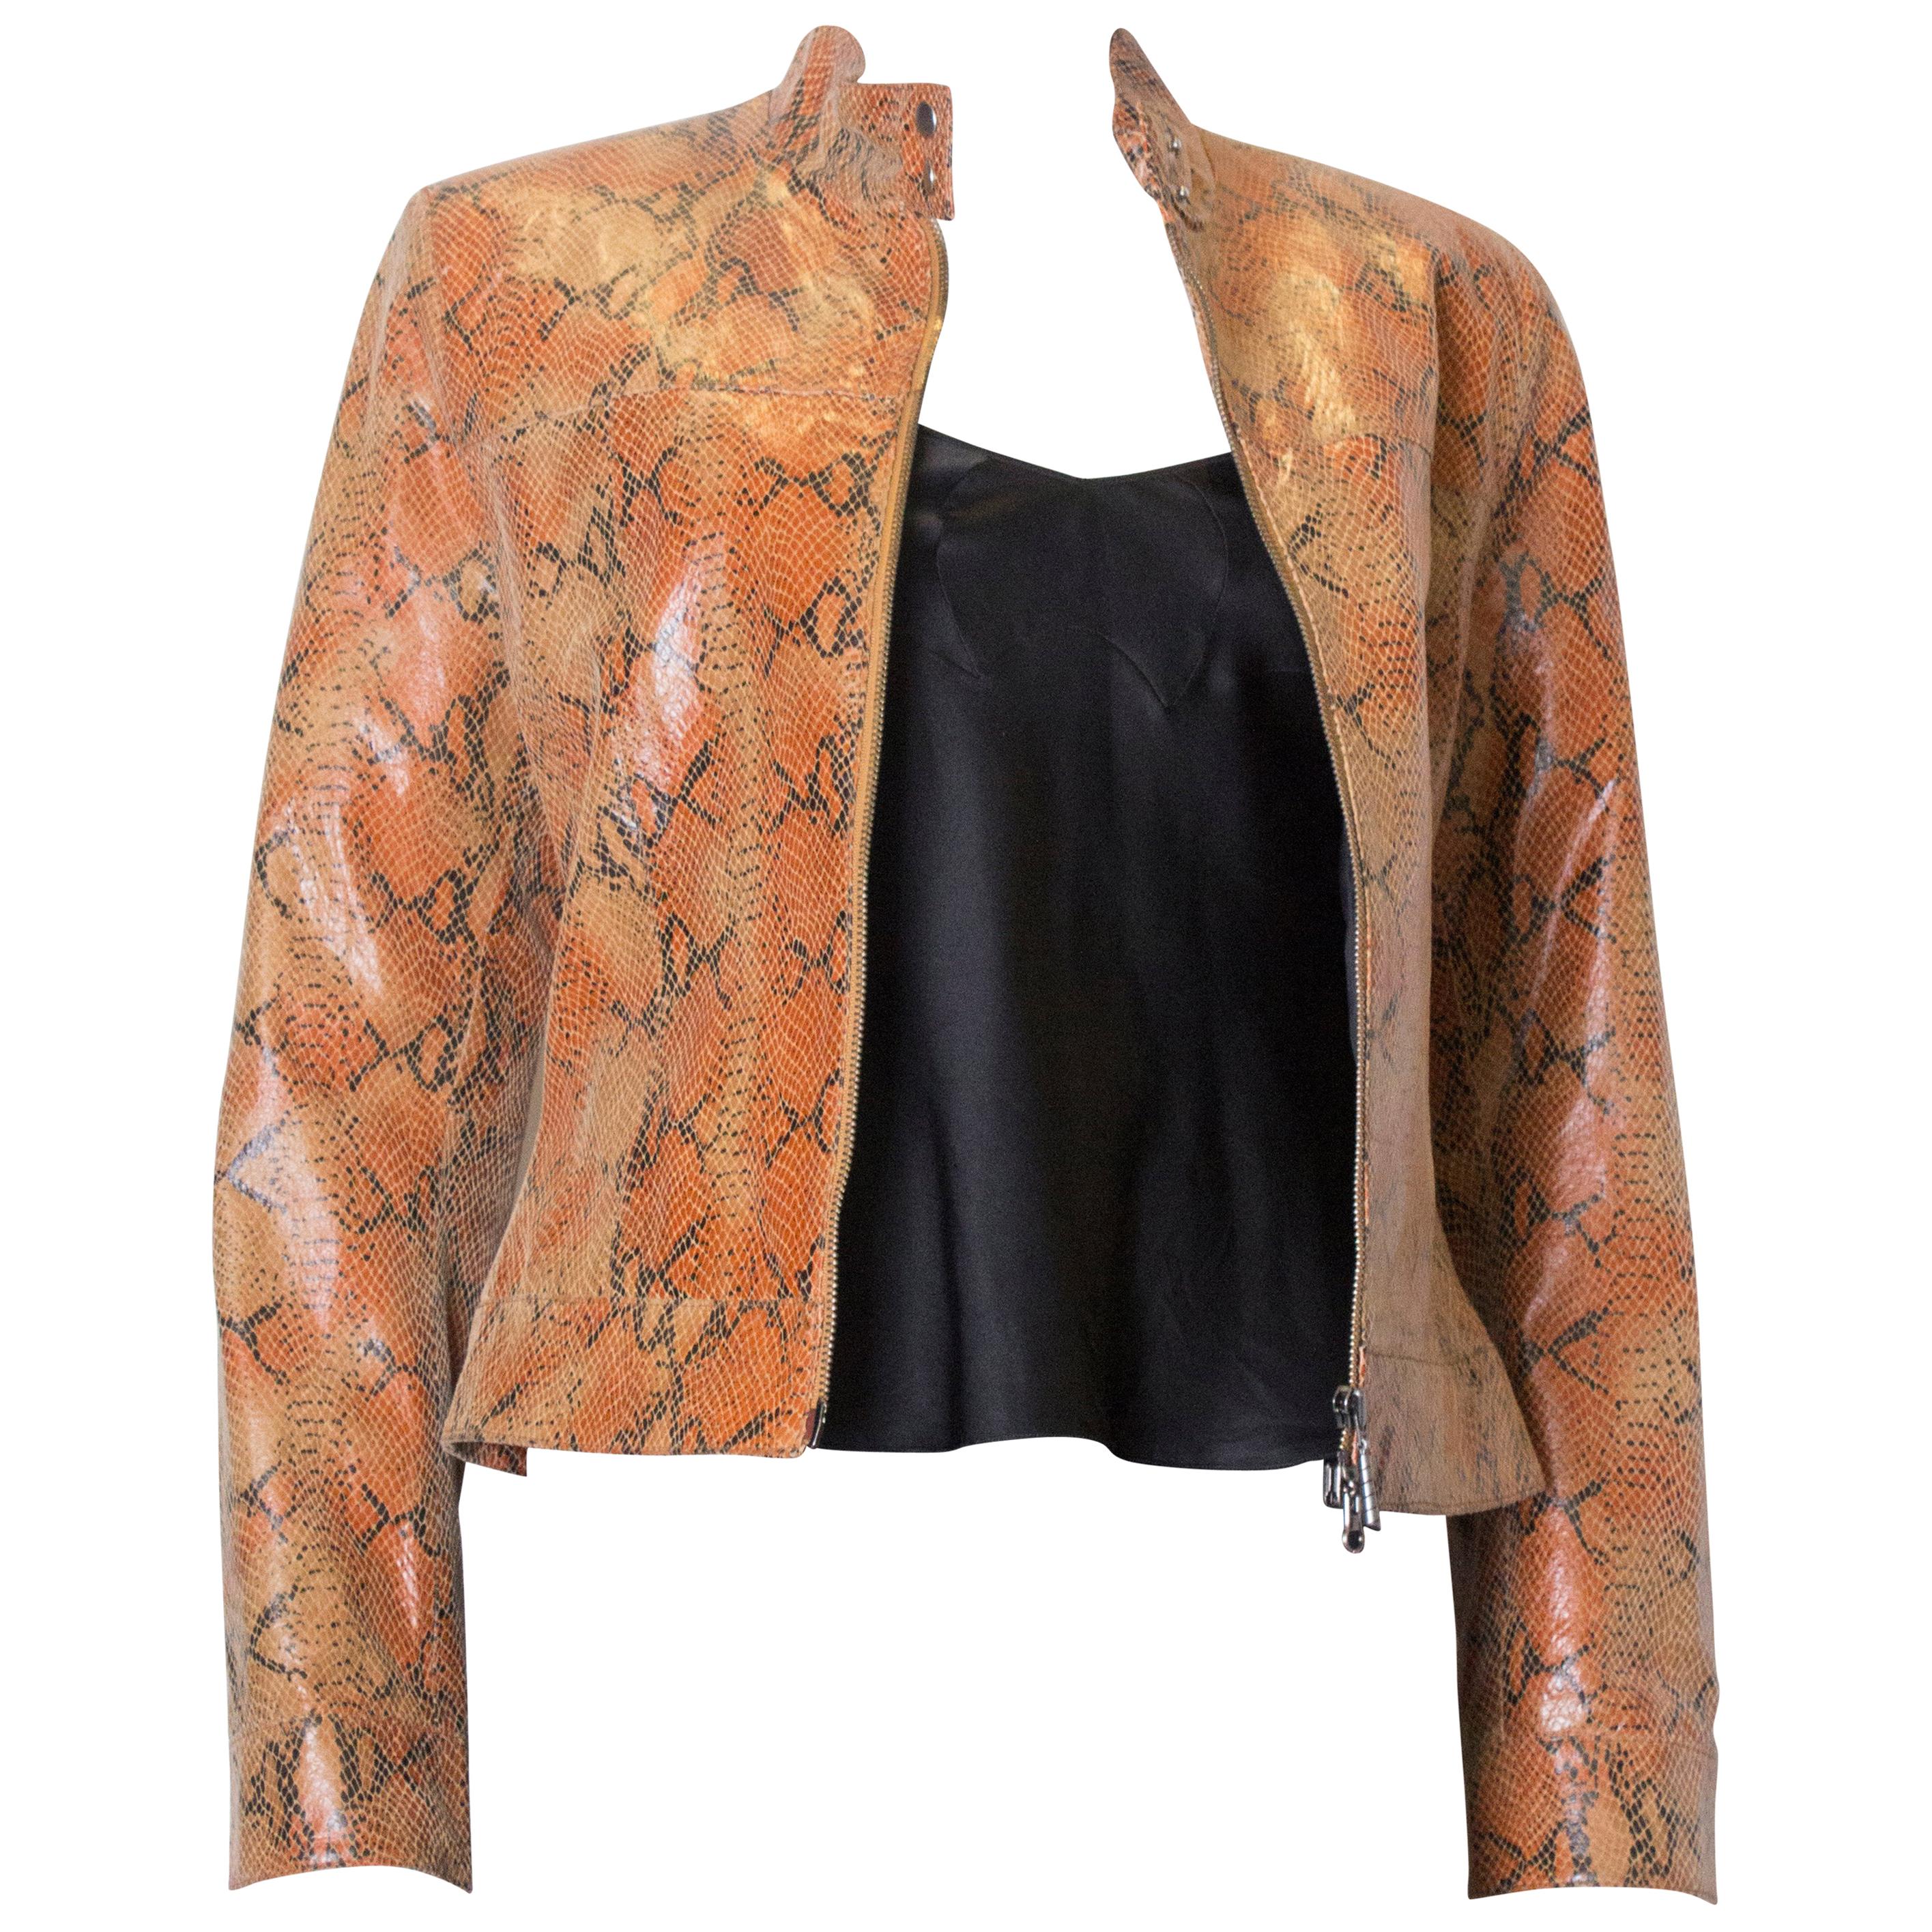 Vintage Tan and Black Snakeskin Jacket